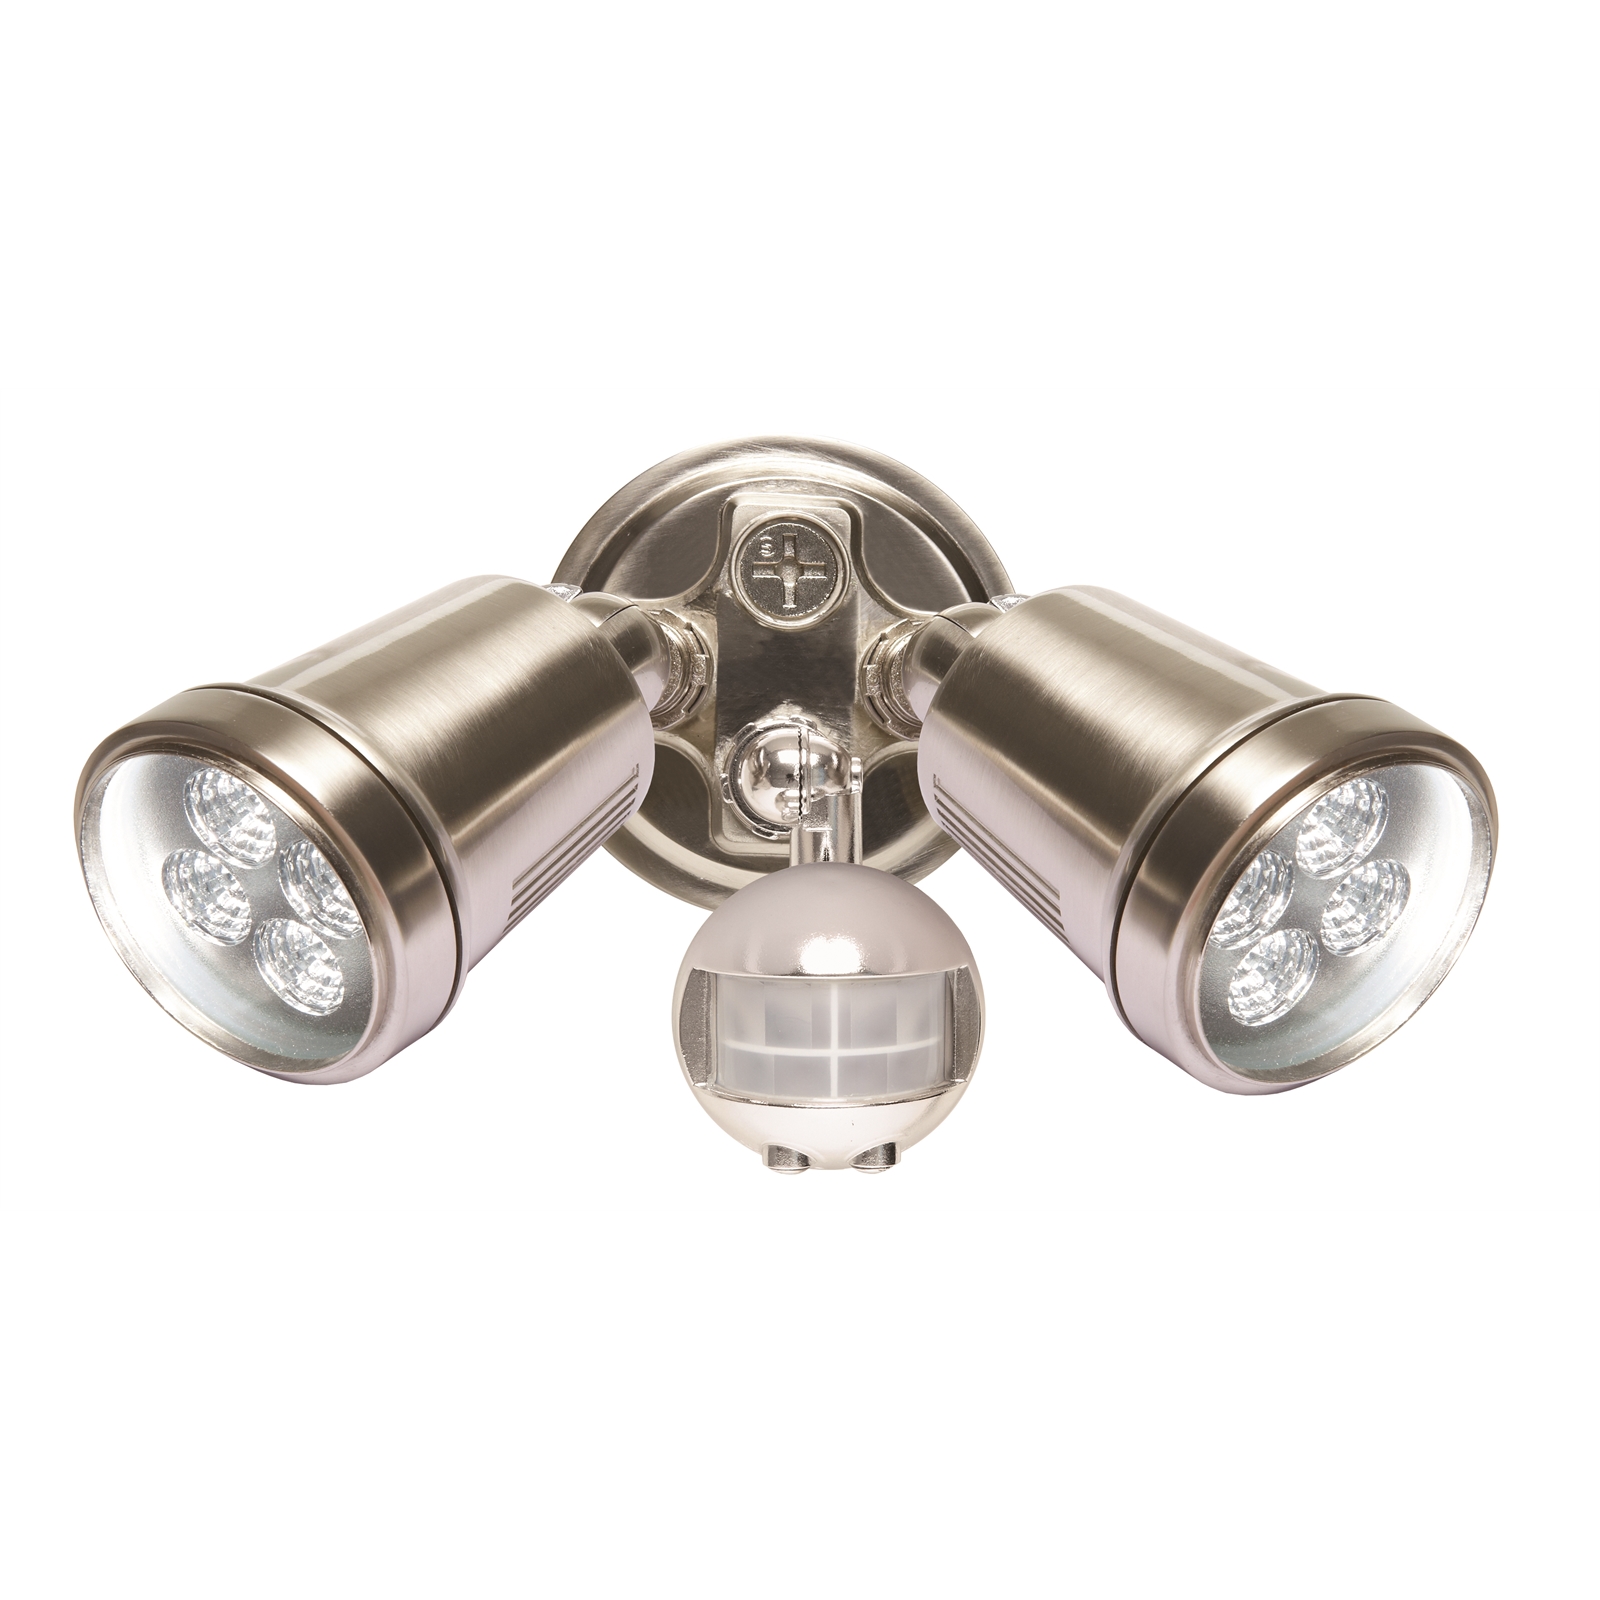 Brilliant Avalon LED Twin Security Sensor Light